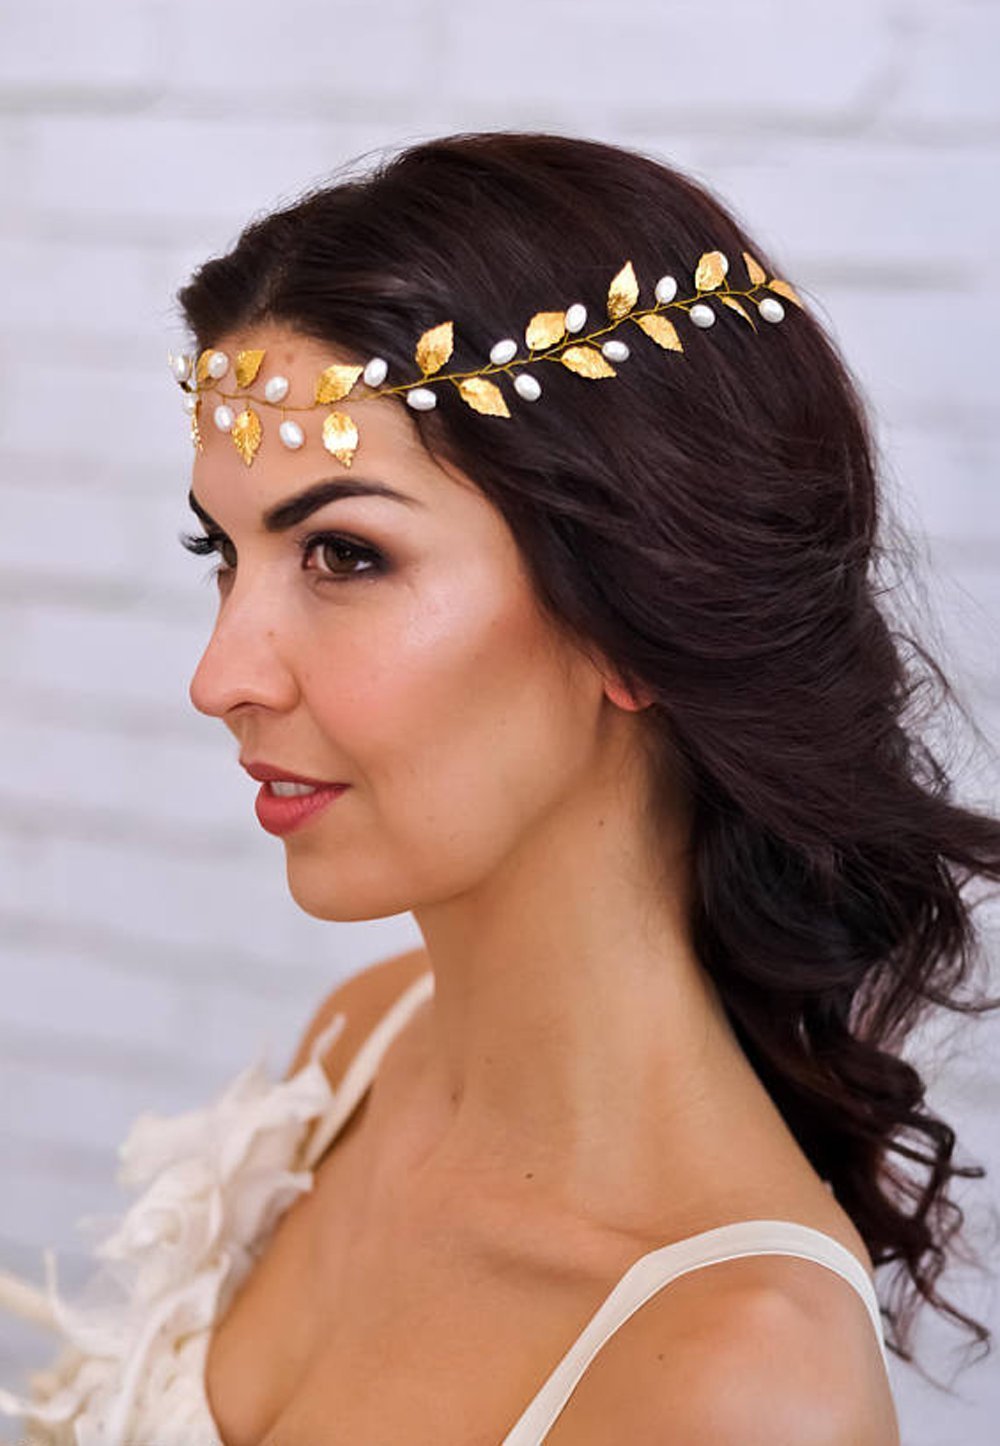 [Australia] - Yean Bridal Head Accessories Hair Vines for Women and Girls 